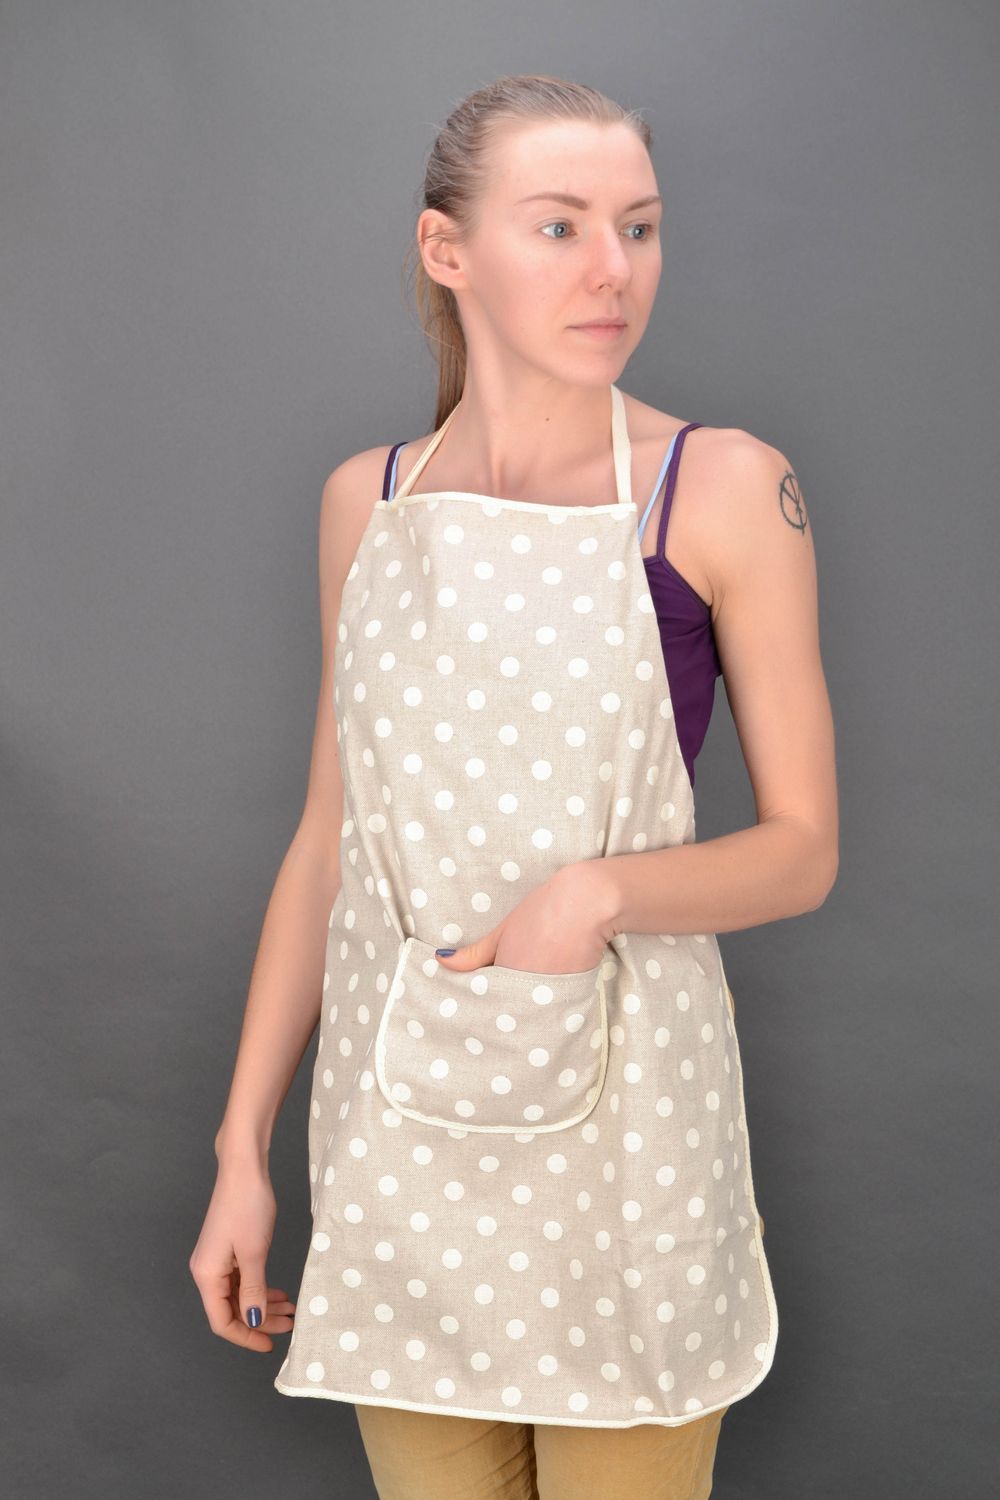 Polka dot fabric kitchen apron photo 1